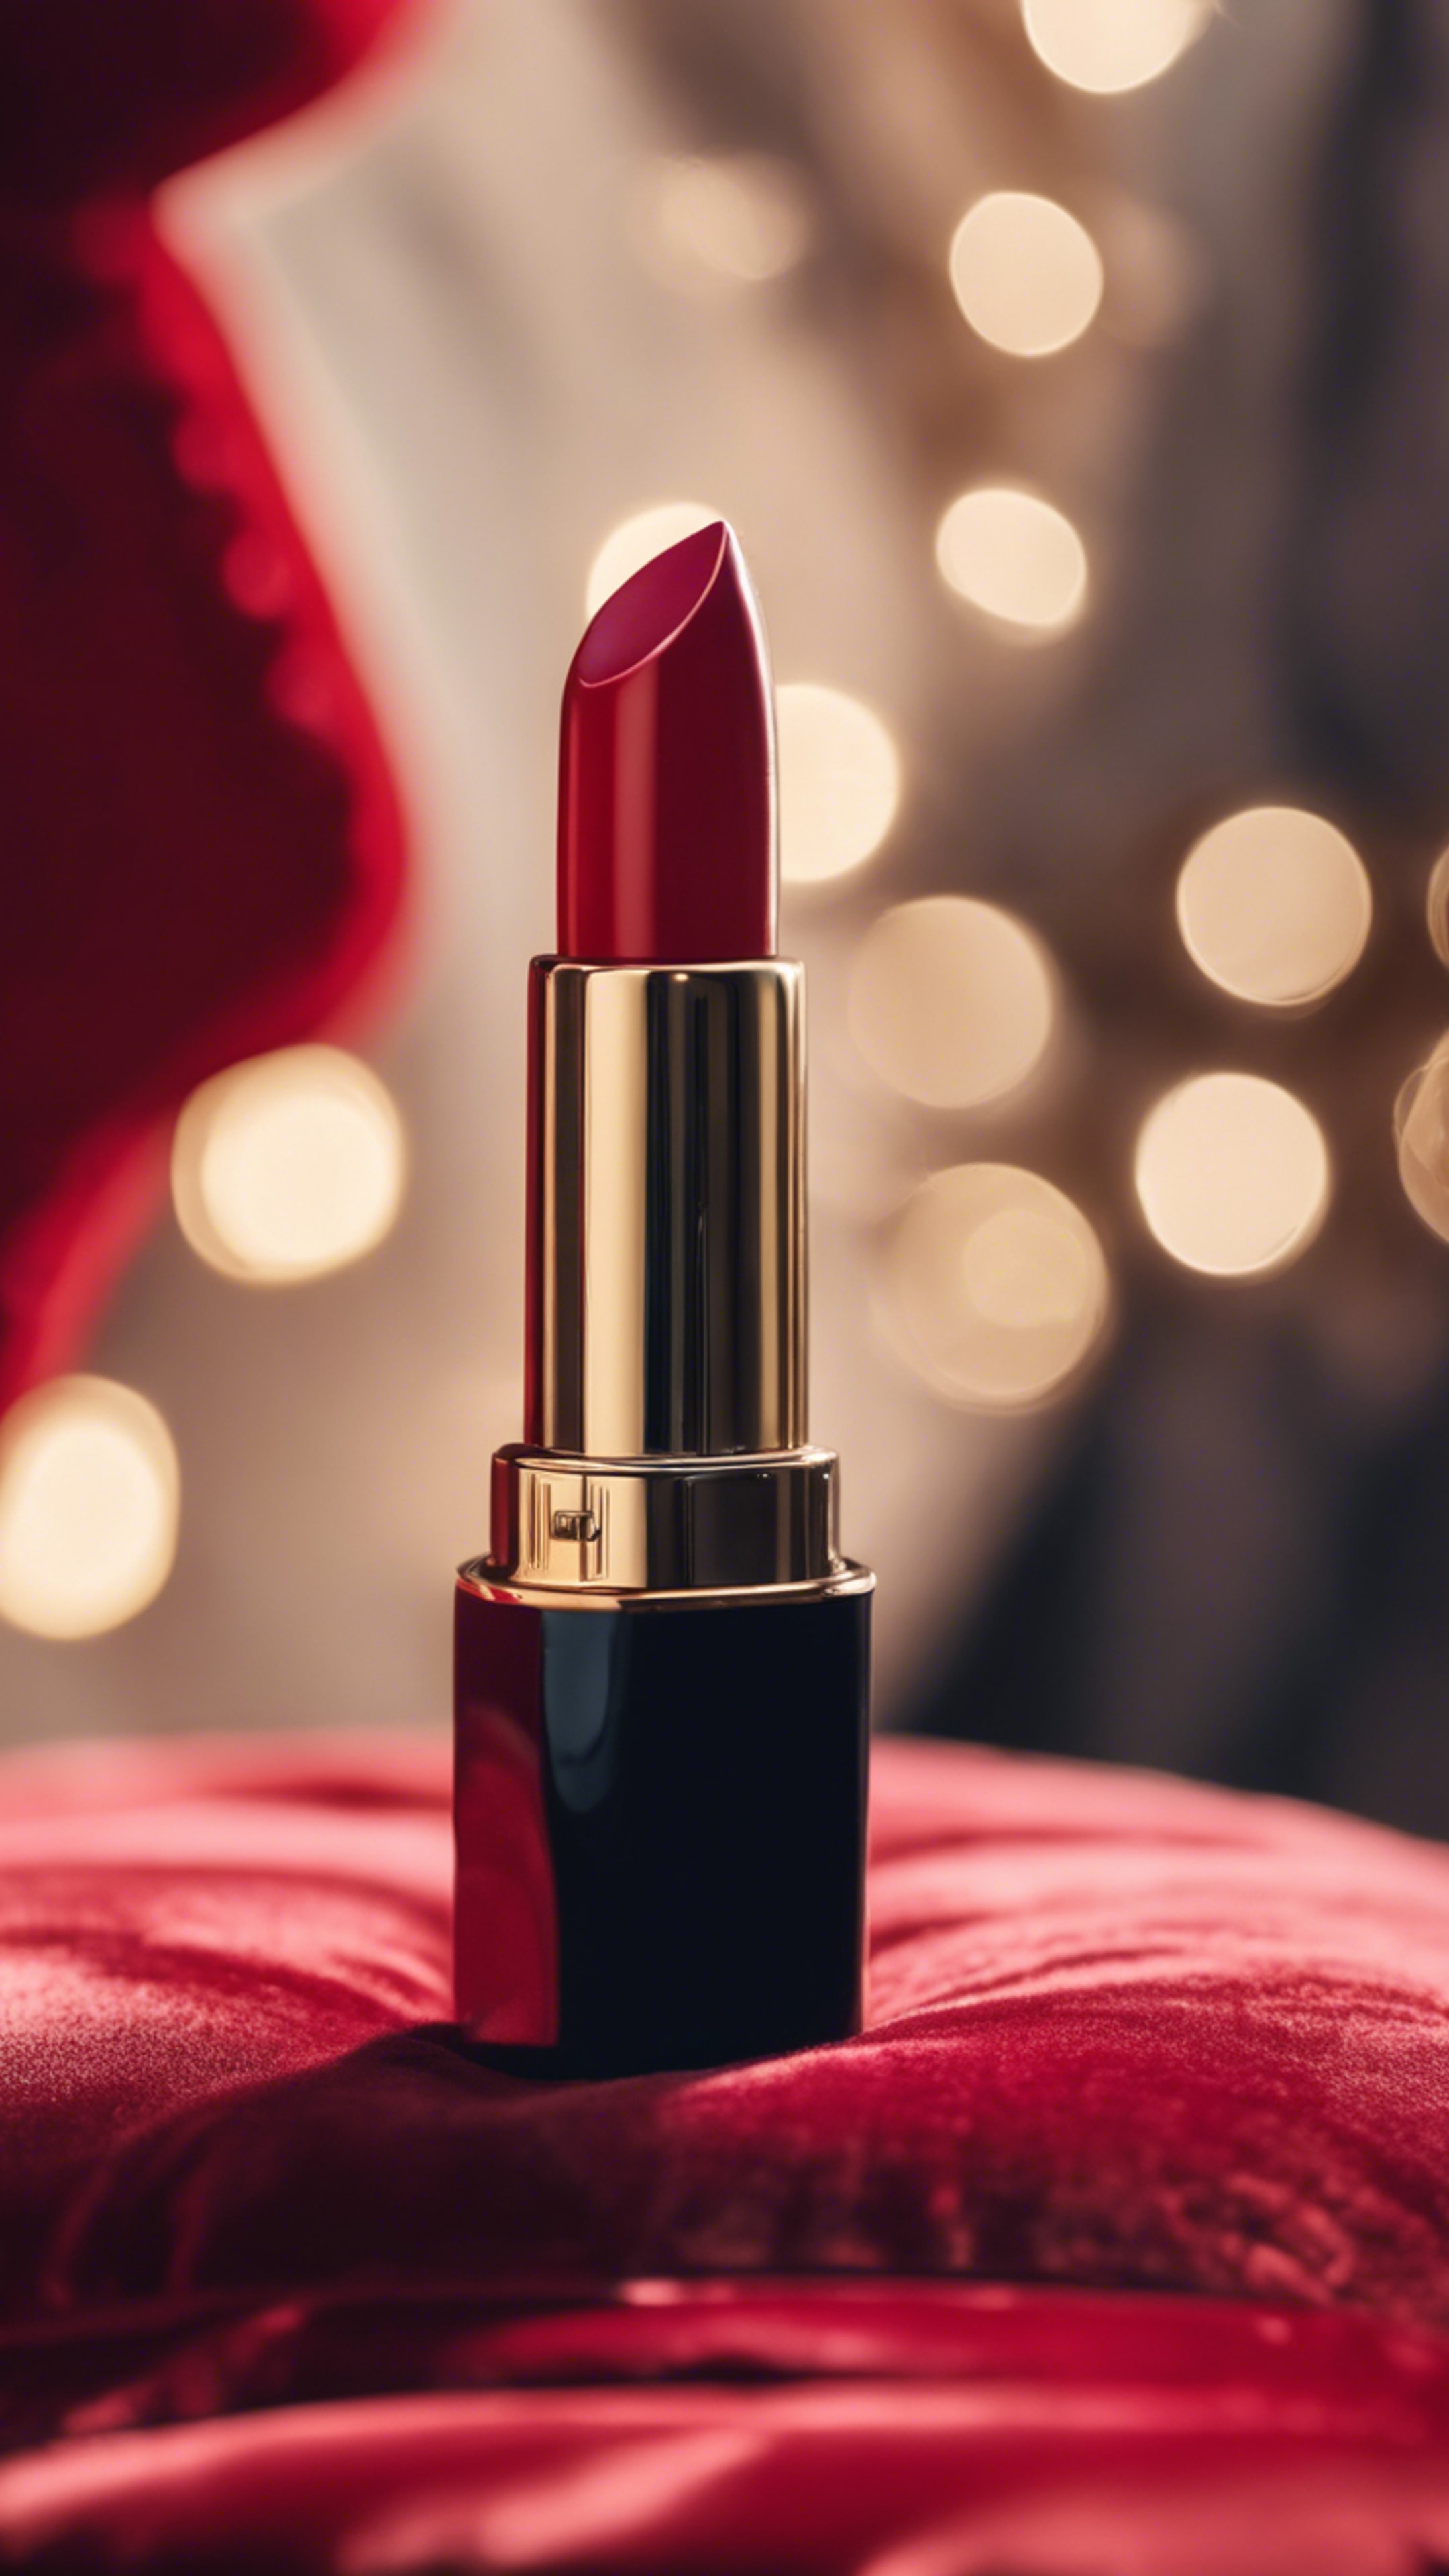 A luxury red lipstick displayed on a plush velvet cushion. Tapet[becb77b7269f4dbdb5b5]